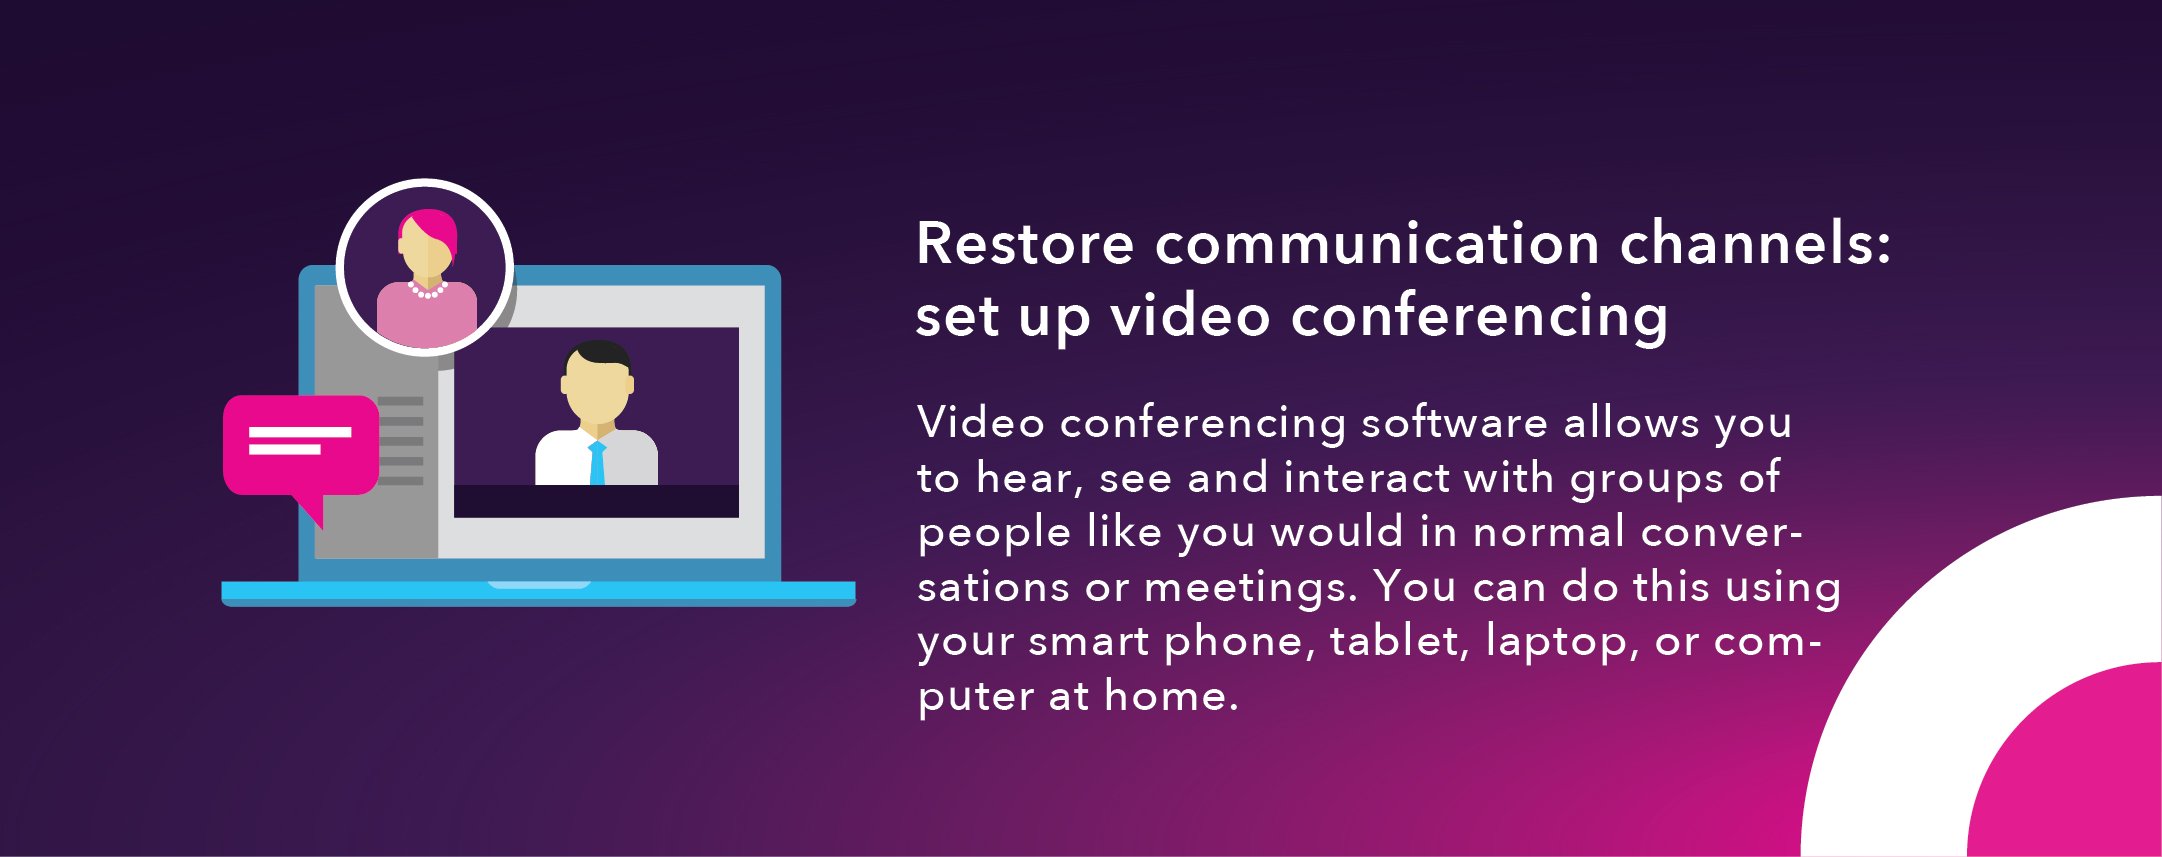 1. Restore communication channels: set up video conferencing